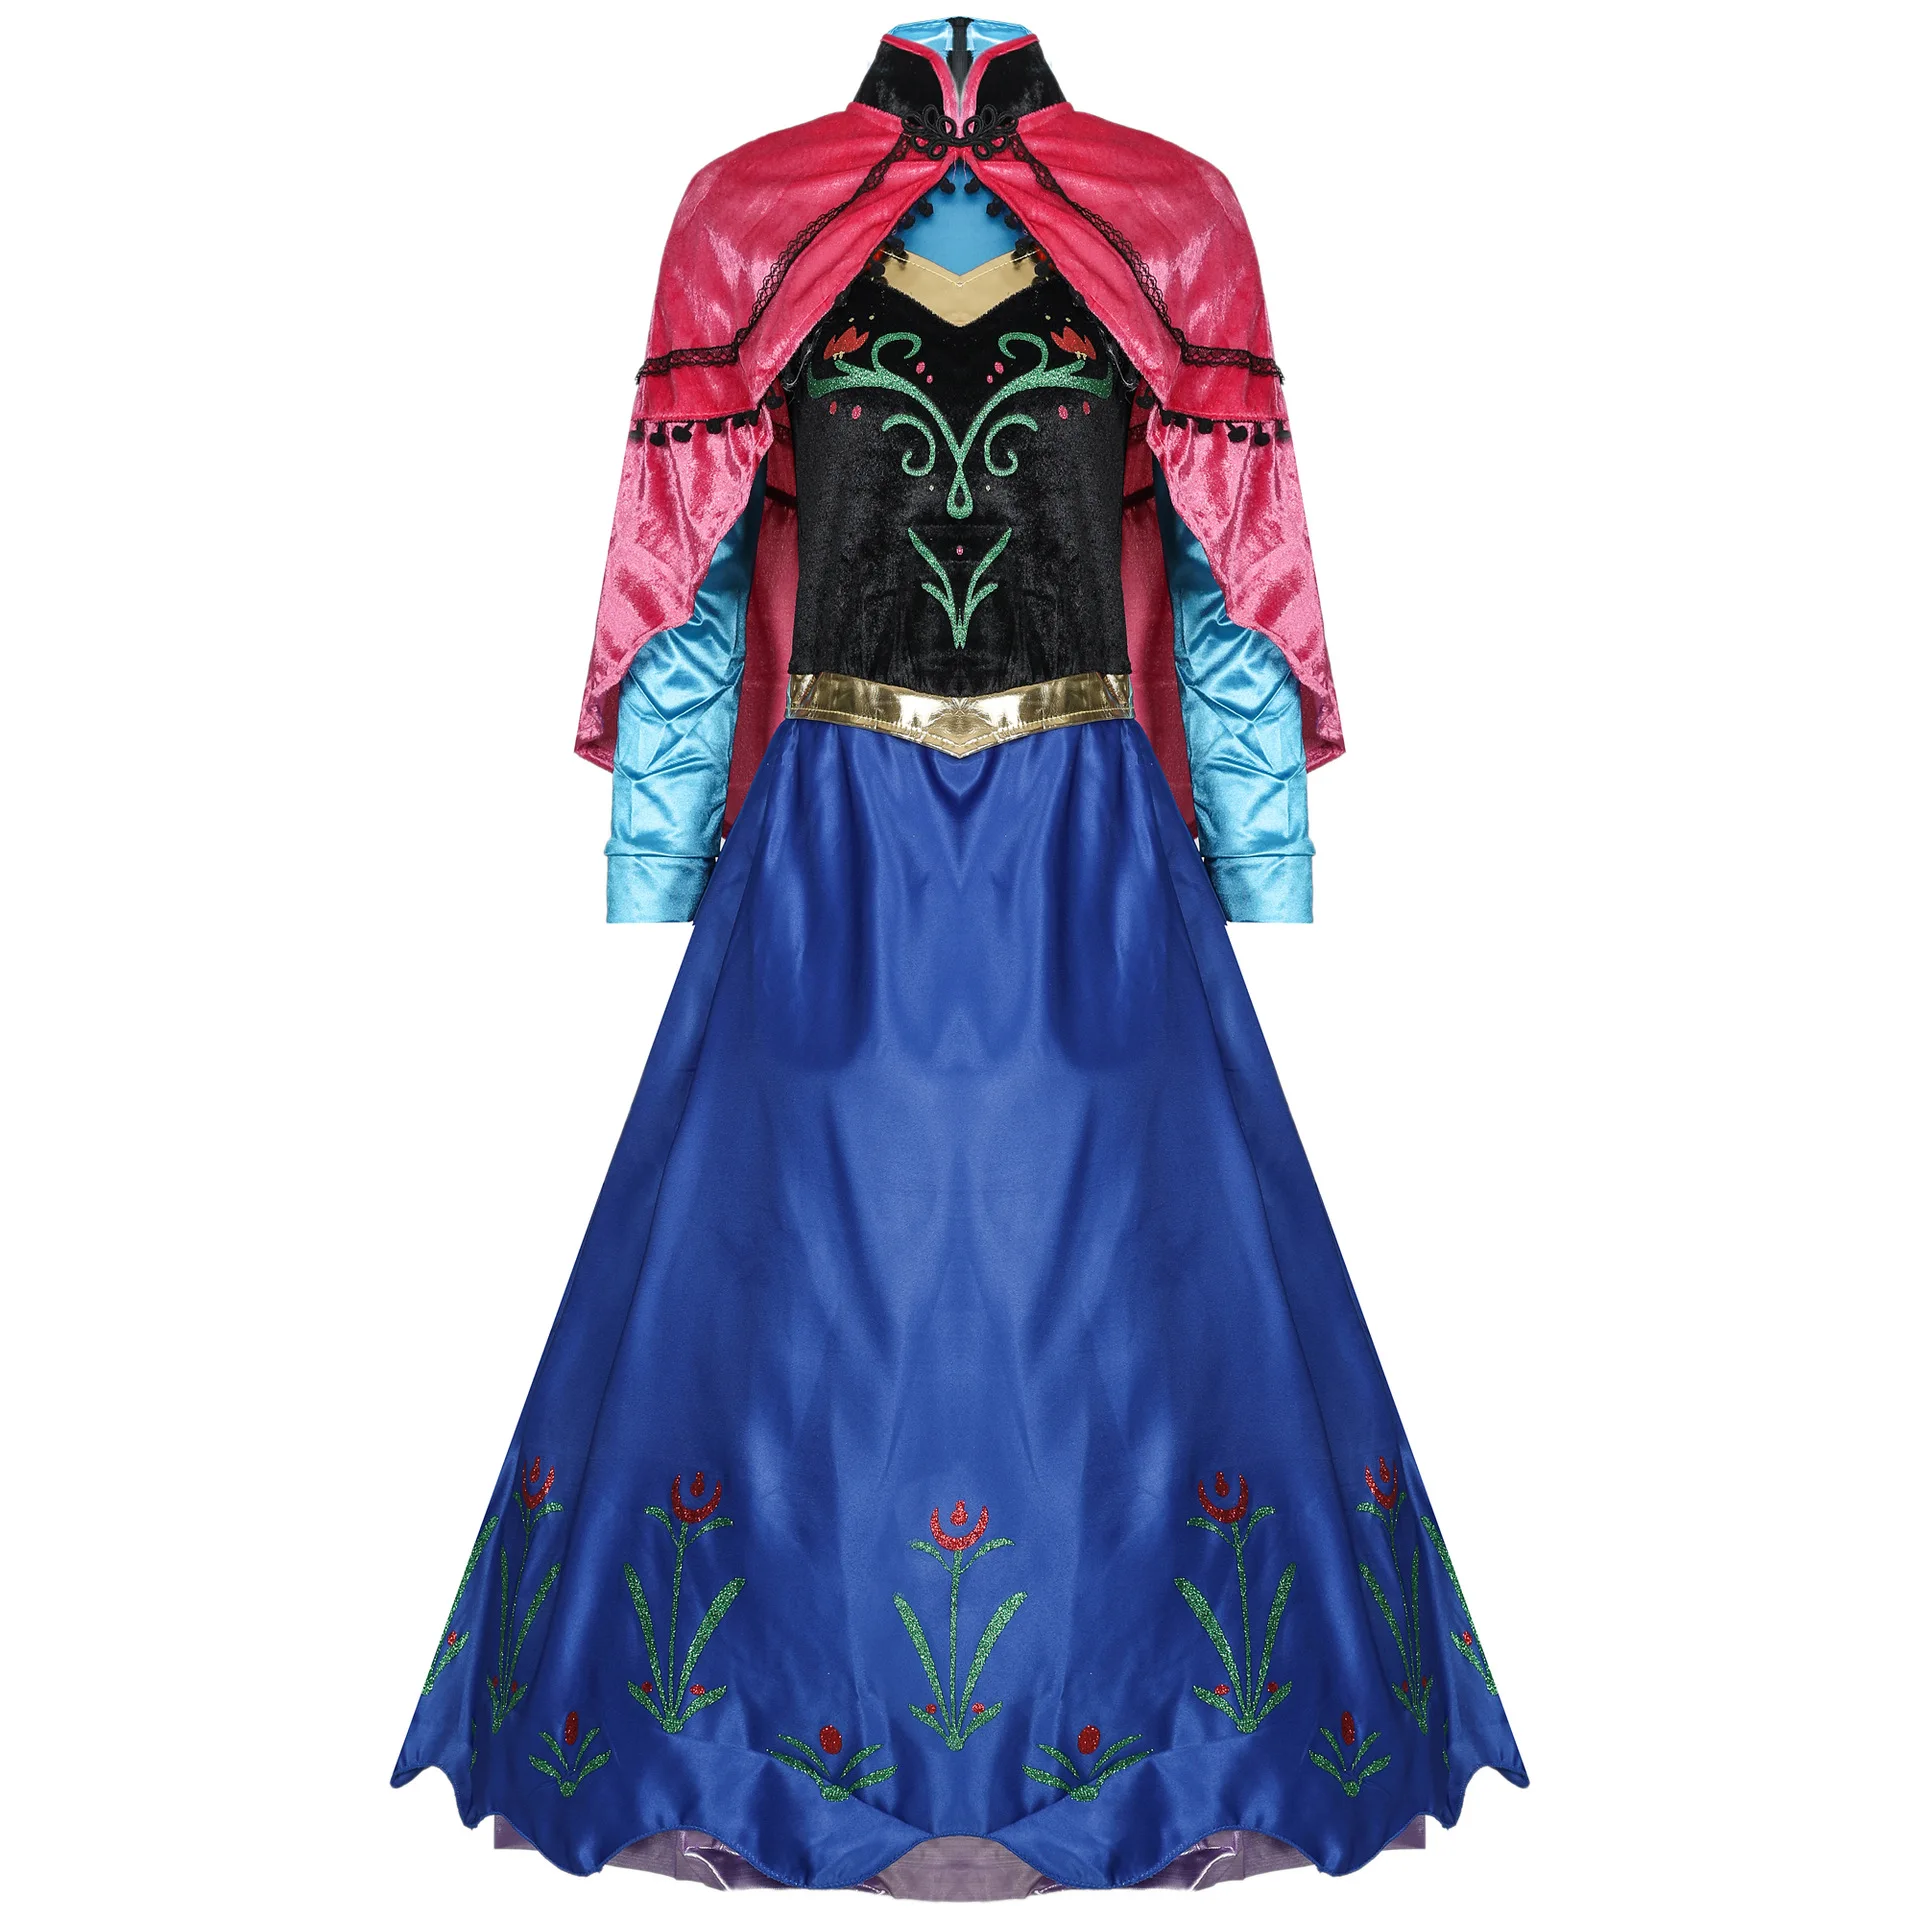 Arendelle-Disfraz de princesa Anna para mujer adulta, disfraz de Halloween, reina de hielo, Rey, Anna, uniforme de princesa, vestido elegante